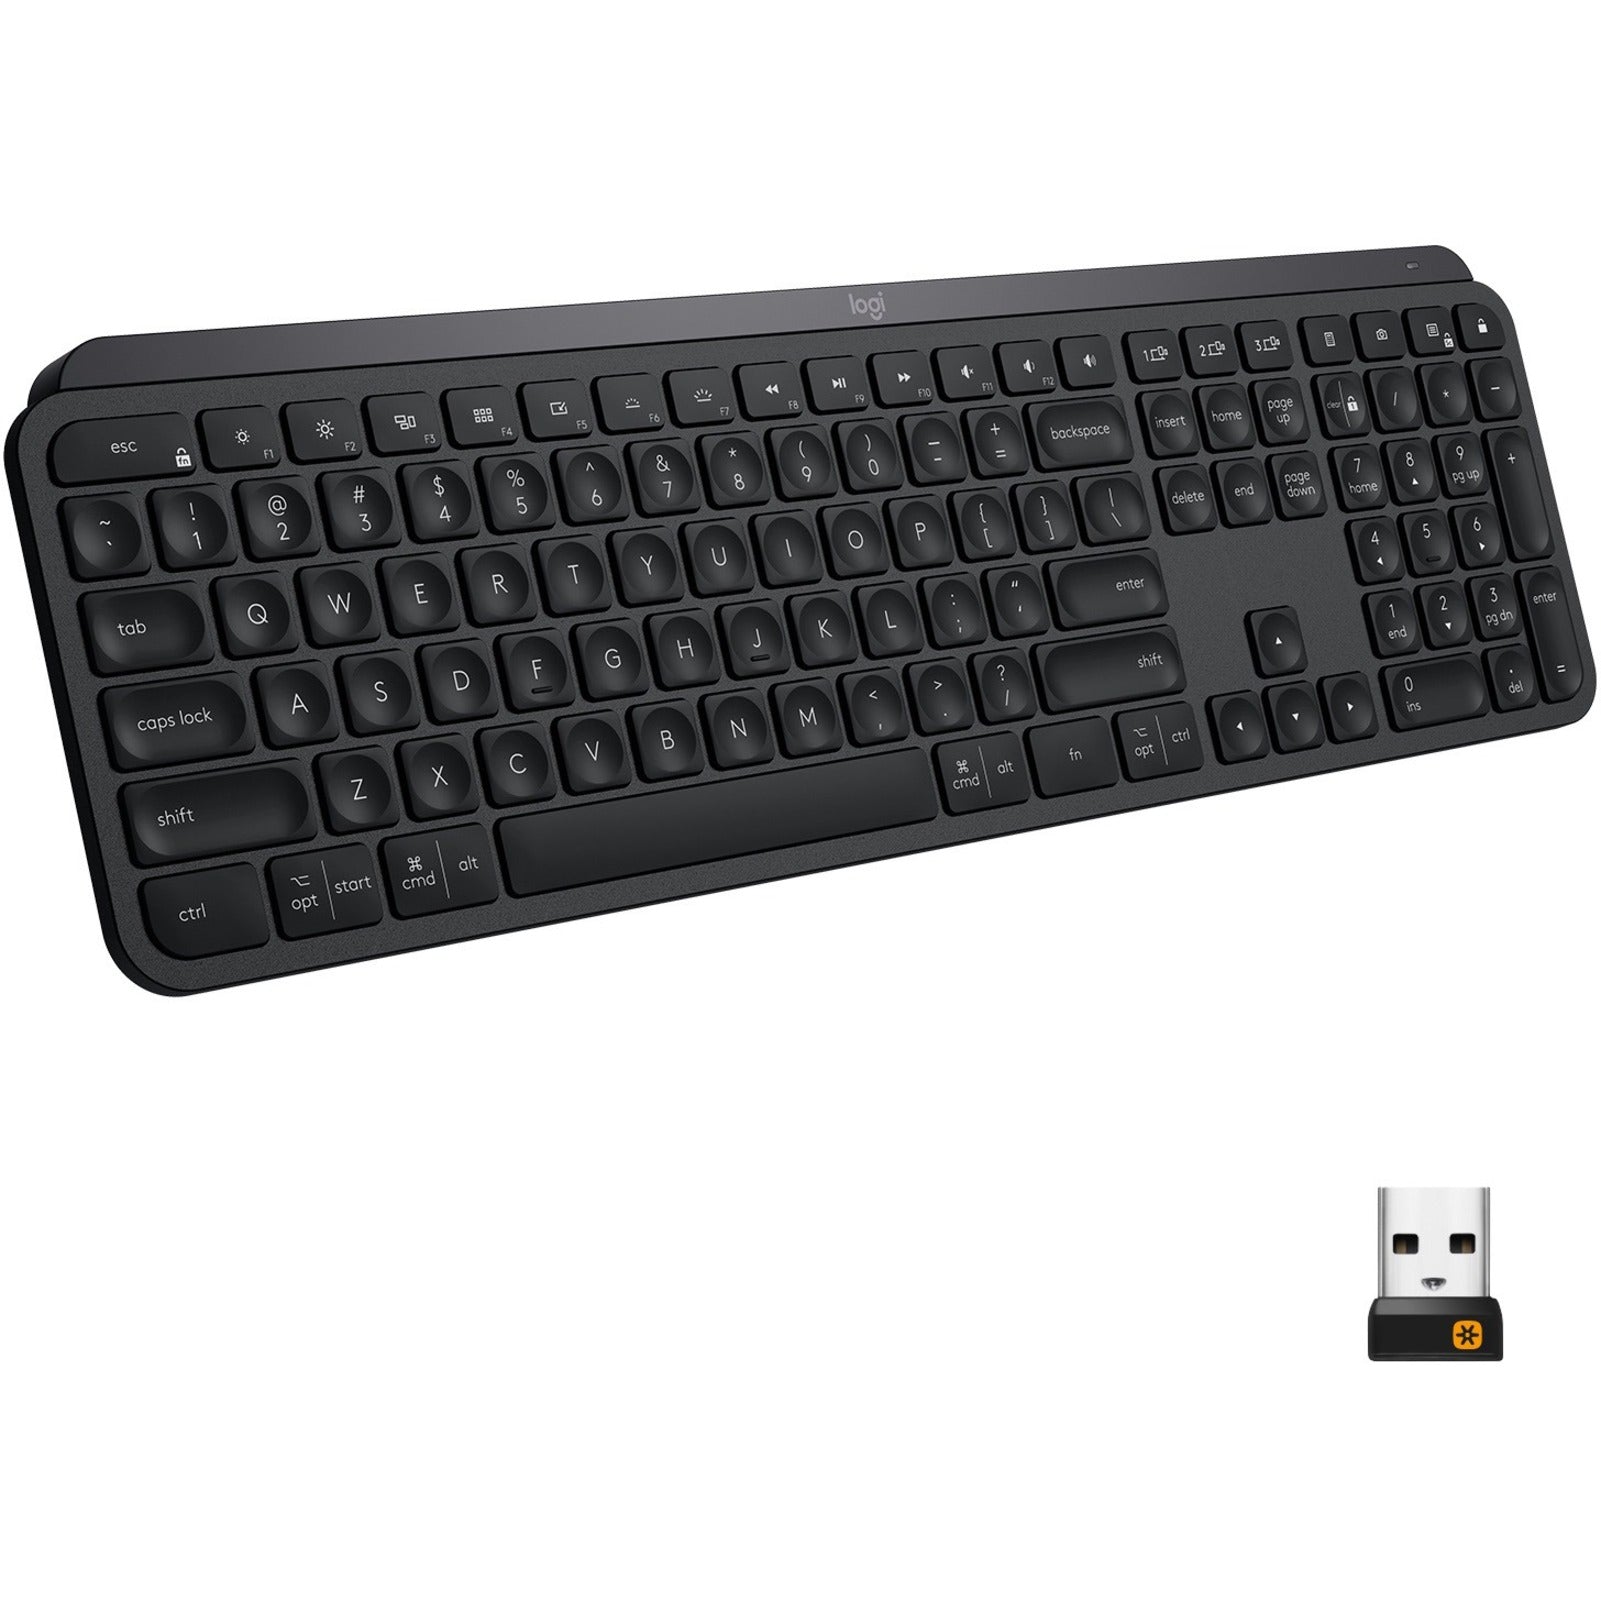 Logitech MX Keys Advanced Wireless Illuminated Keyboard - Tactile Responsive Typing, Backlighting, Bluetooth, USB-C, Metal Build (Black) [Discontinued]